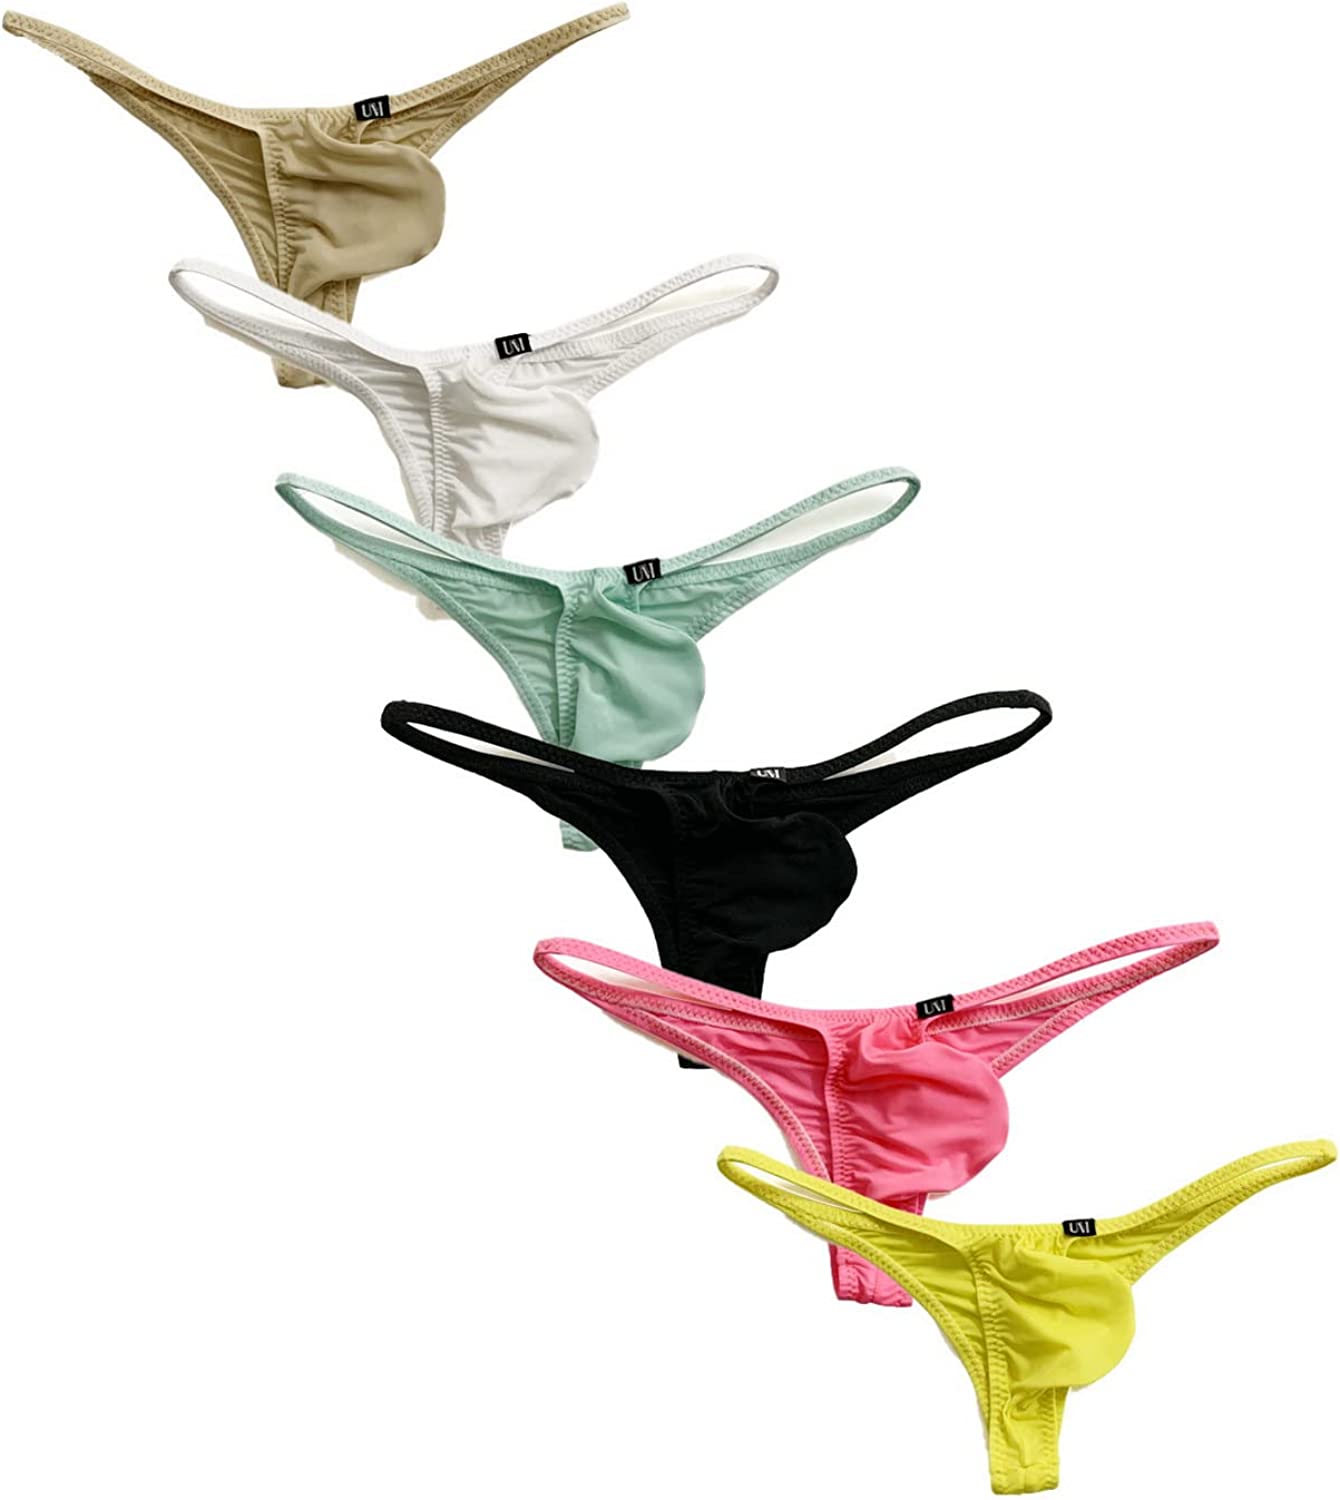 Best Deal for Faringoto Men's Lingerie Ice Silk Underwear Low Waist Mesh